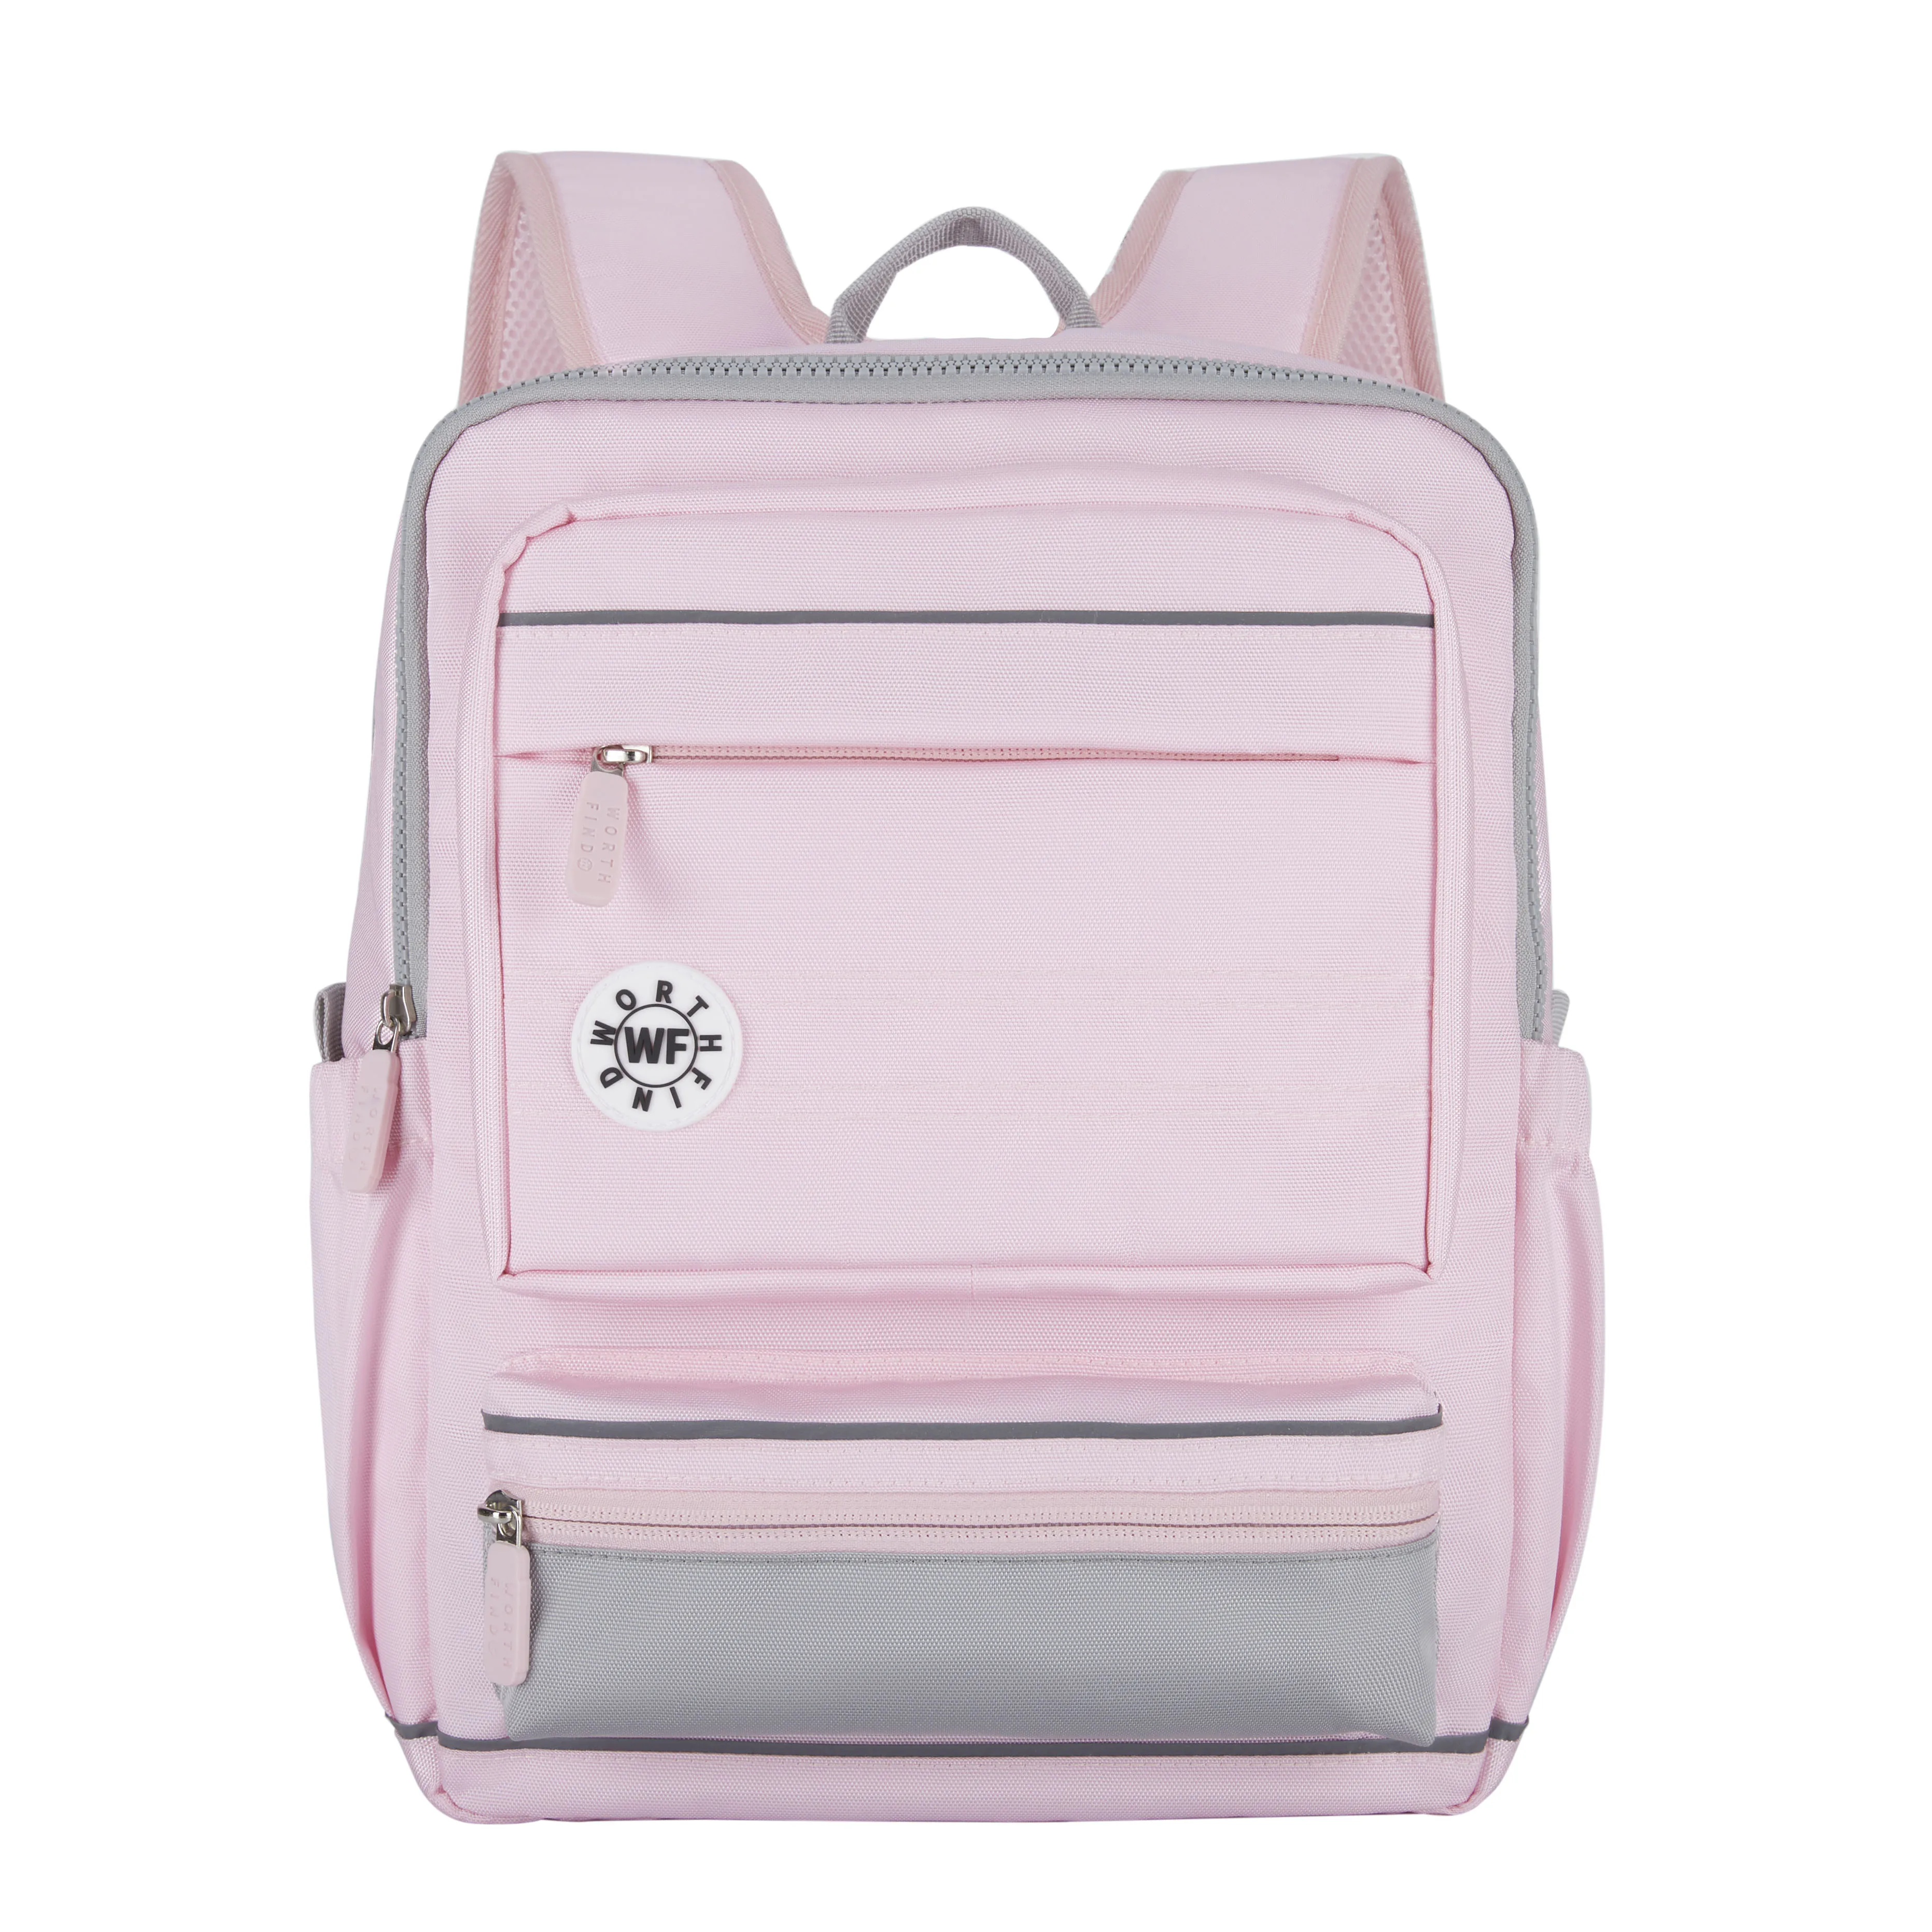 Worthfind New Arrival Double Layer Children Girls Backpack Mochilas School Bags Girls Book Bags For School (62555309484)